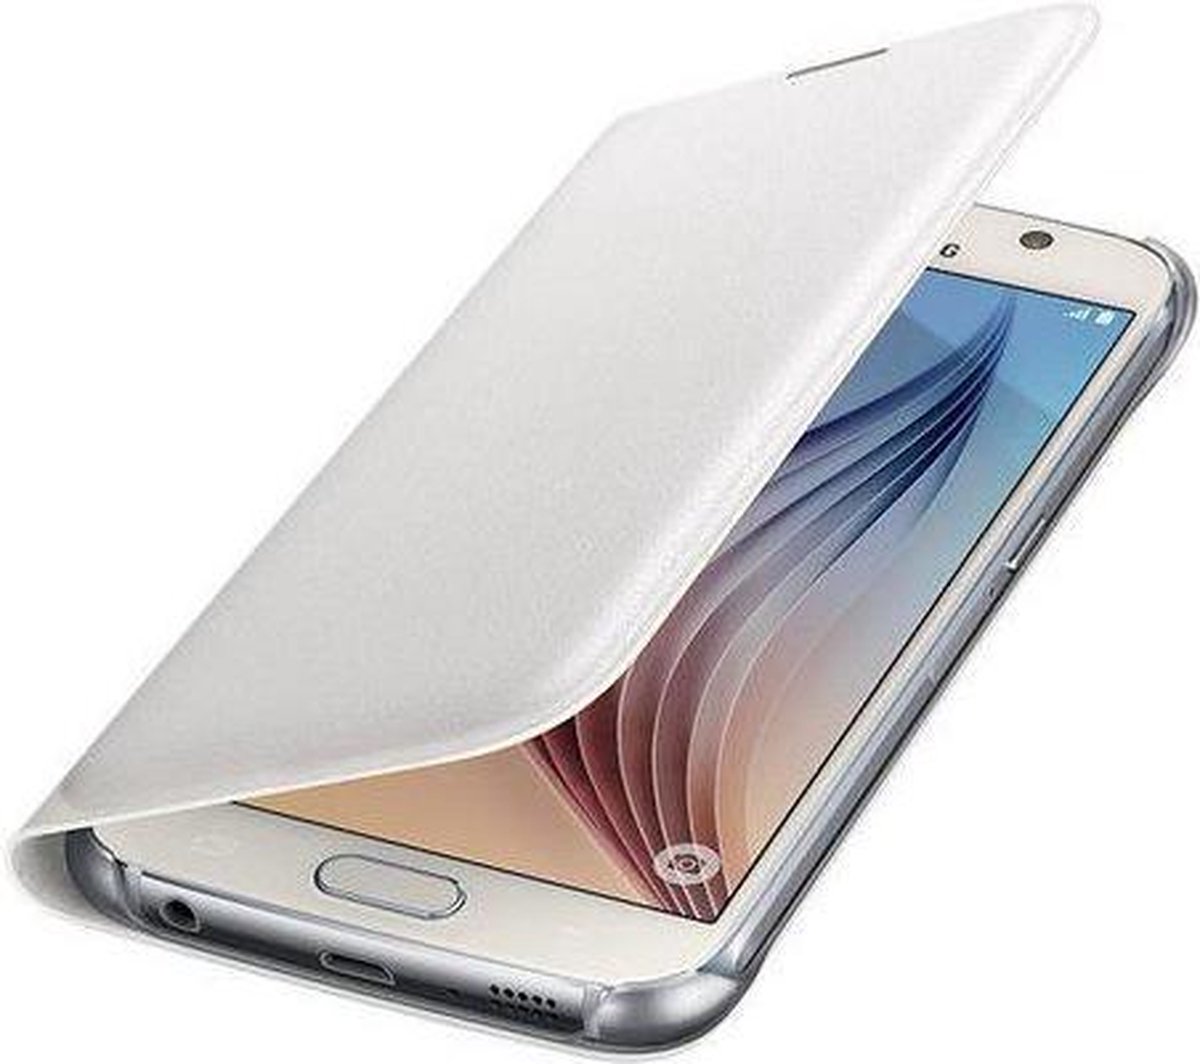 Originele Samsung Galaxy S6 Flip wallet cover wit